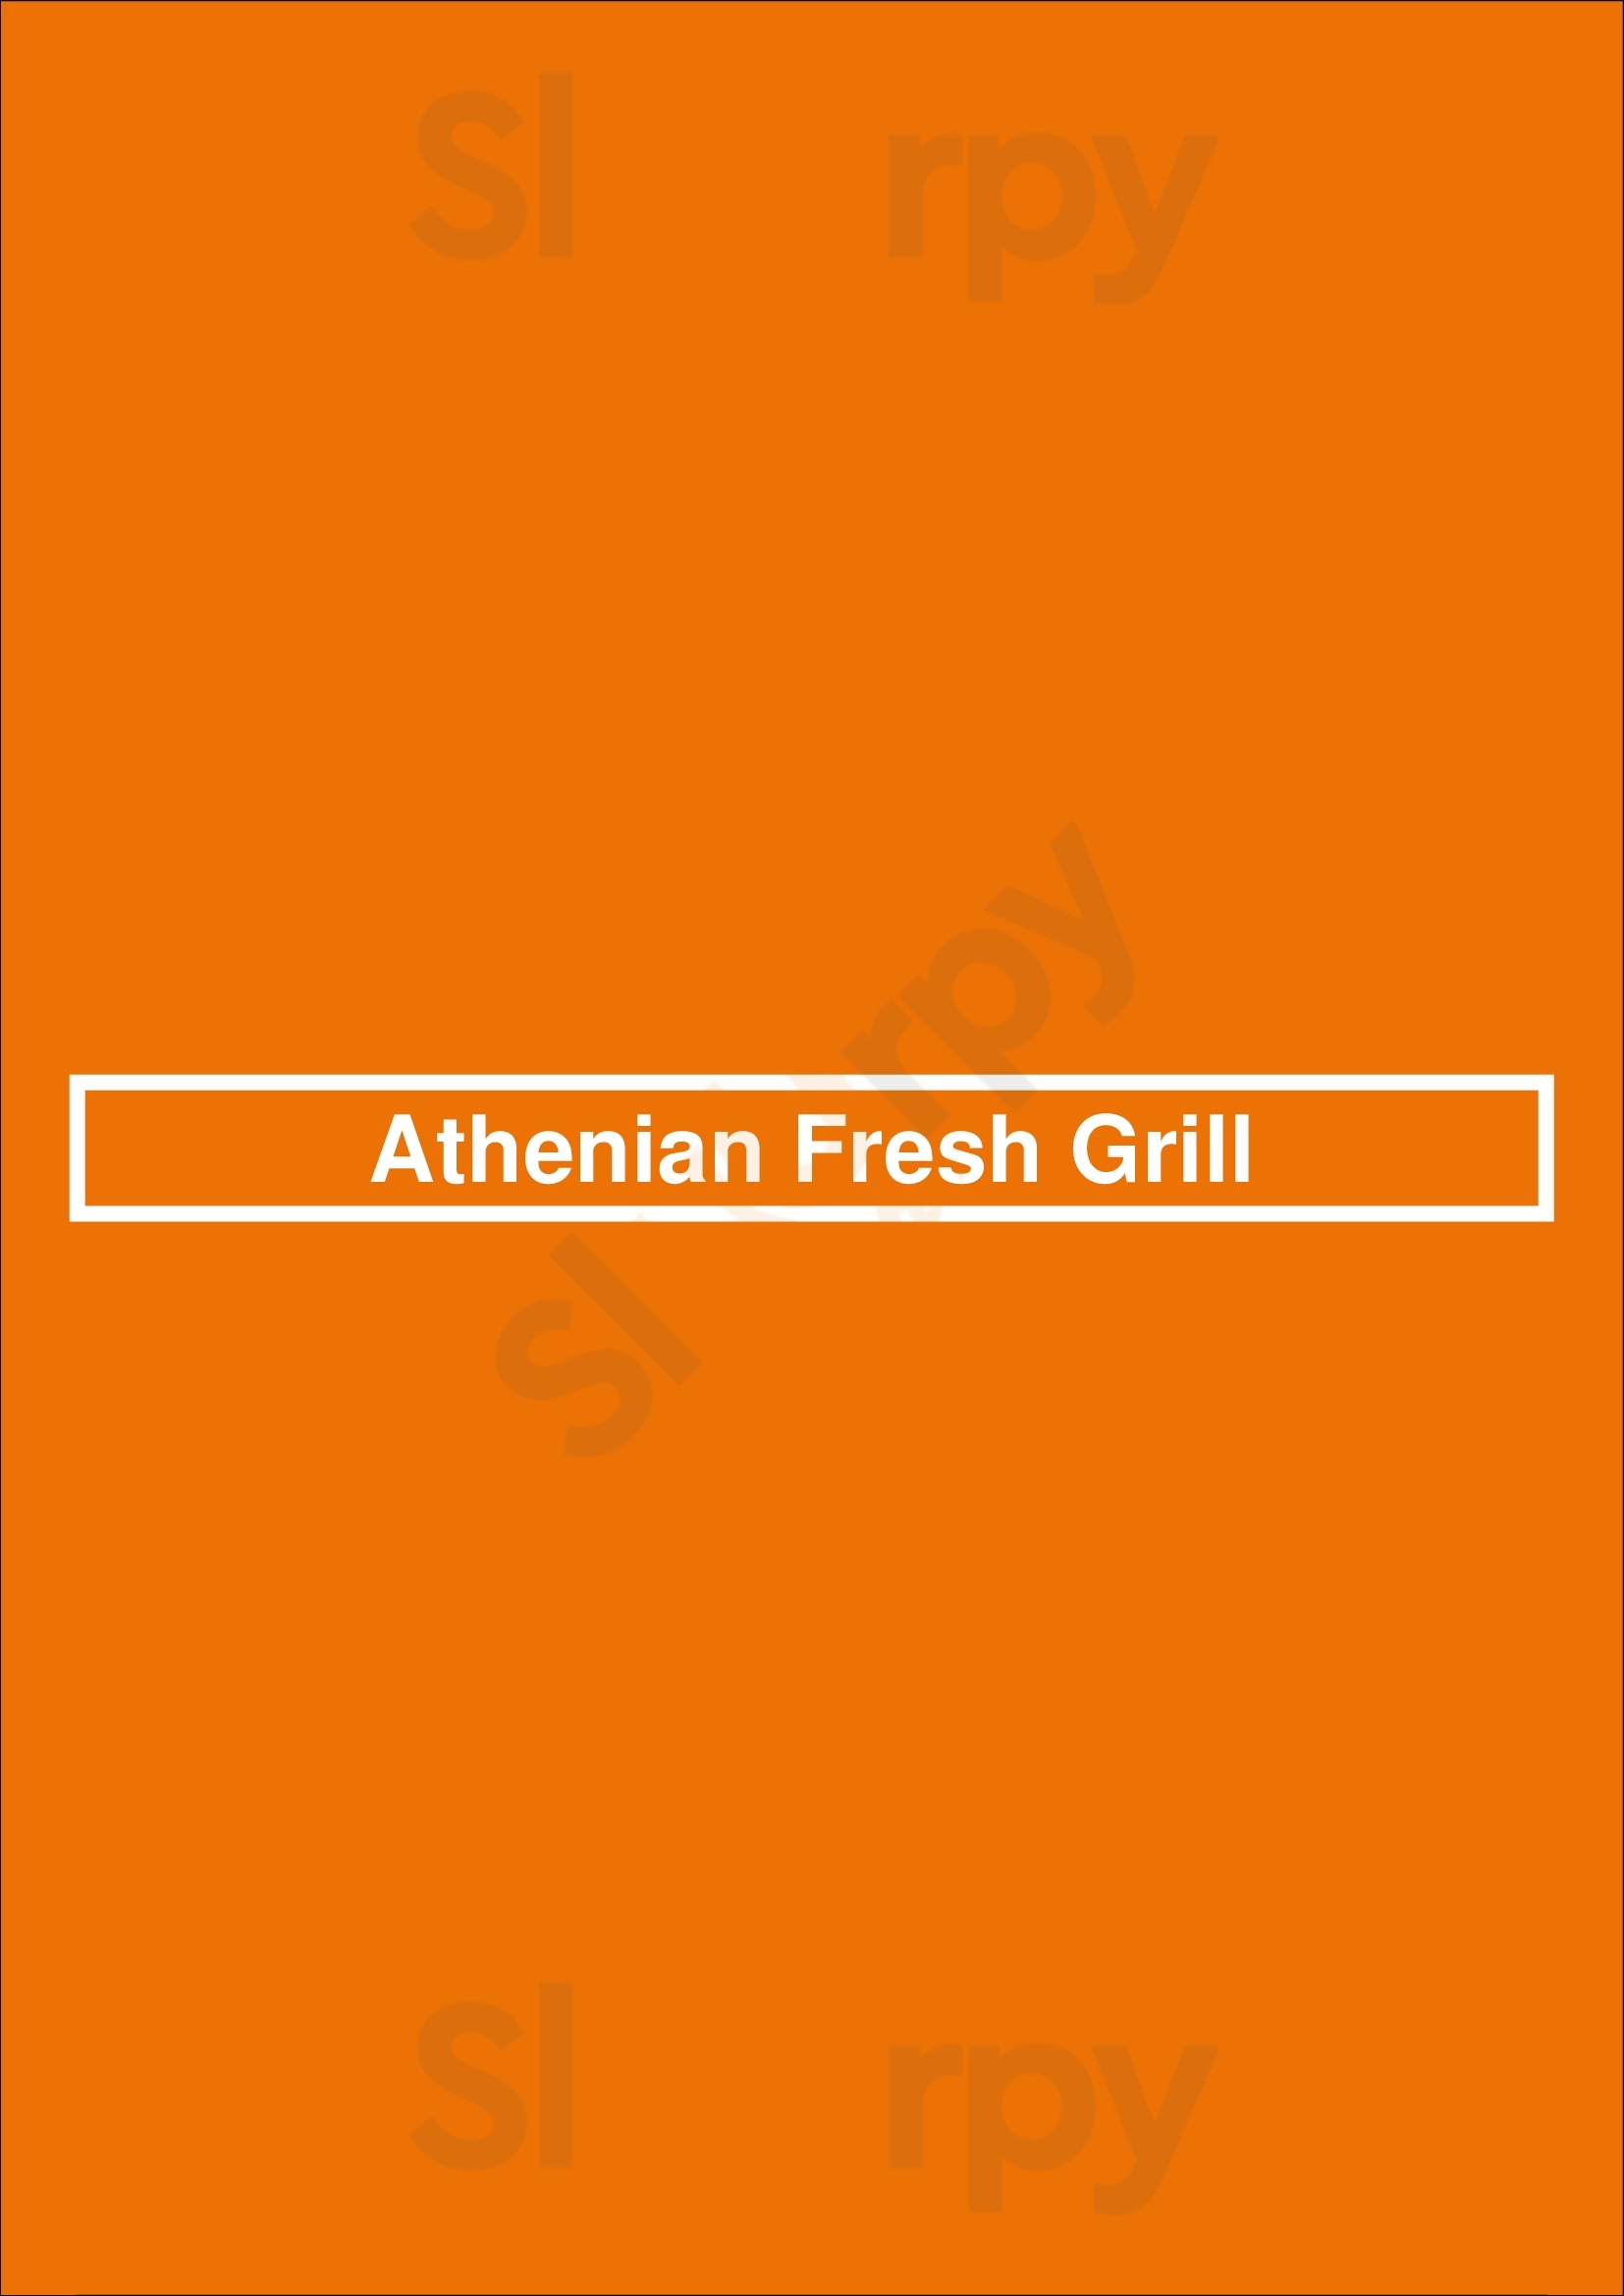 Athenian Fresh Grill North Arlington Menu - 1